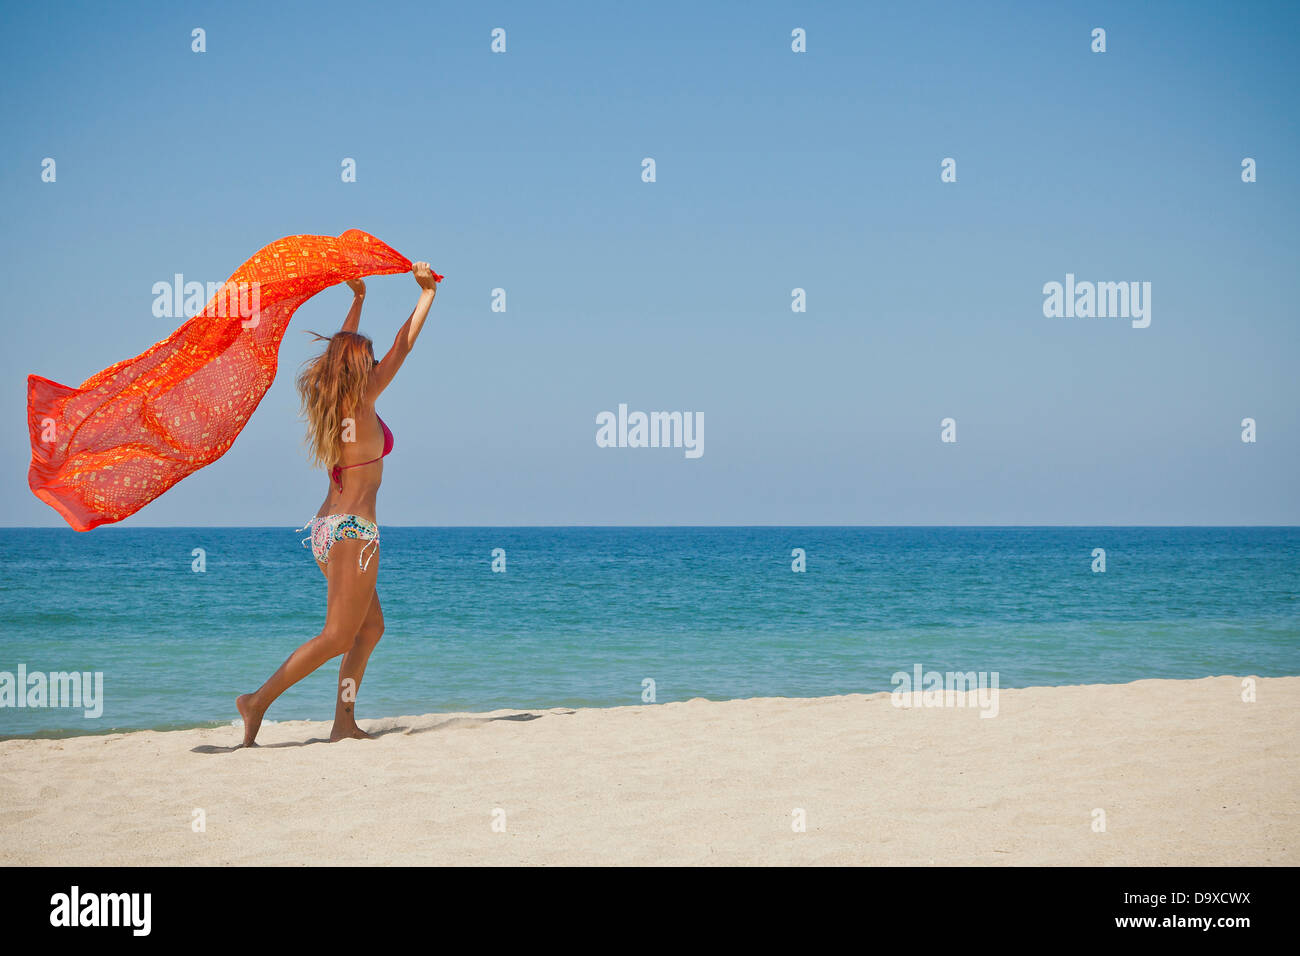 Woman running on beach holding sarong Stock Photo